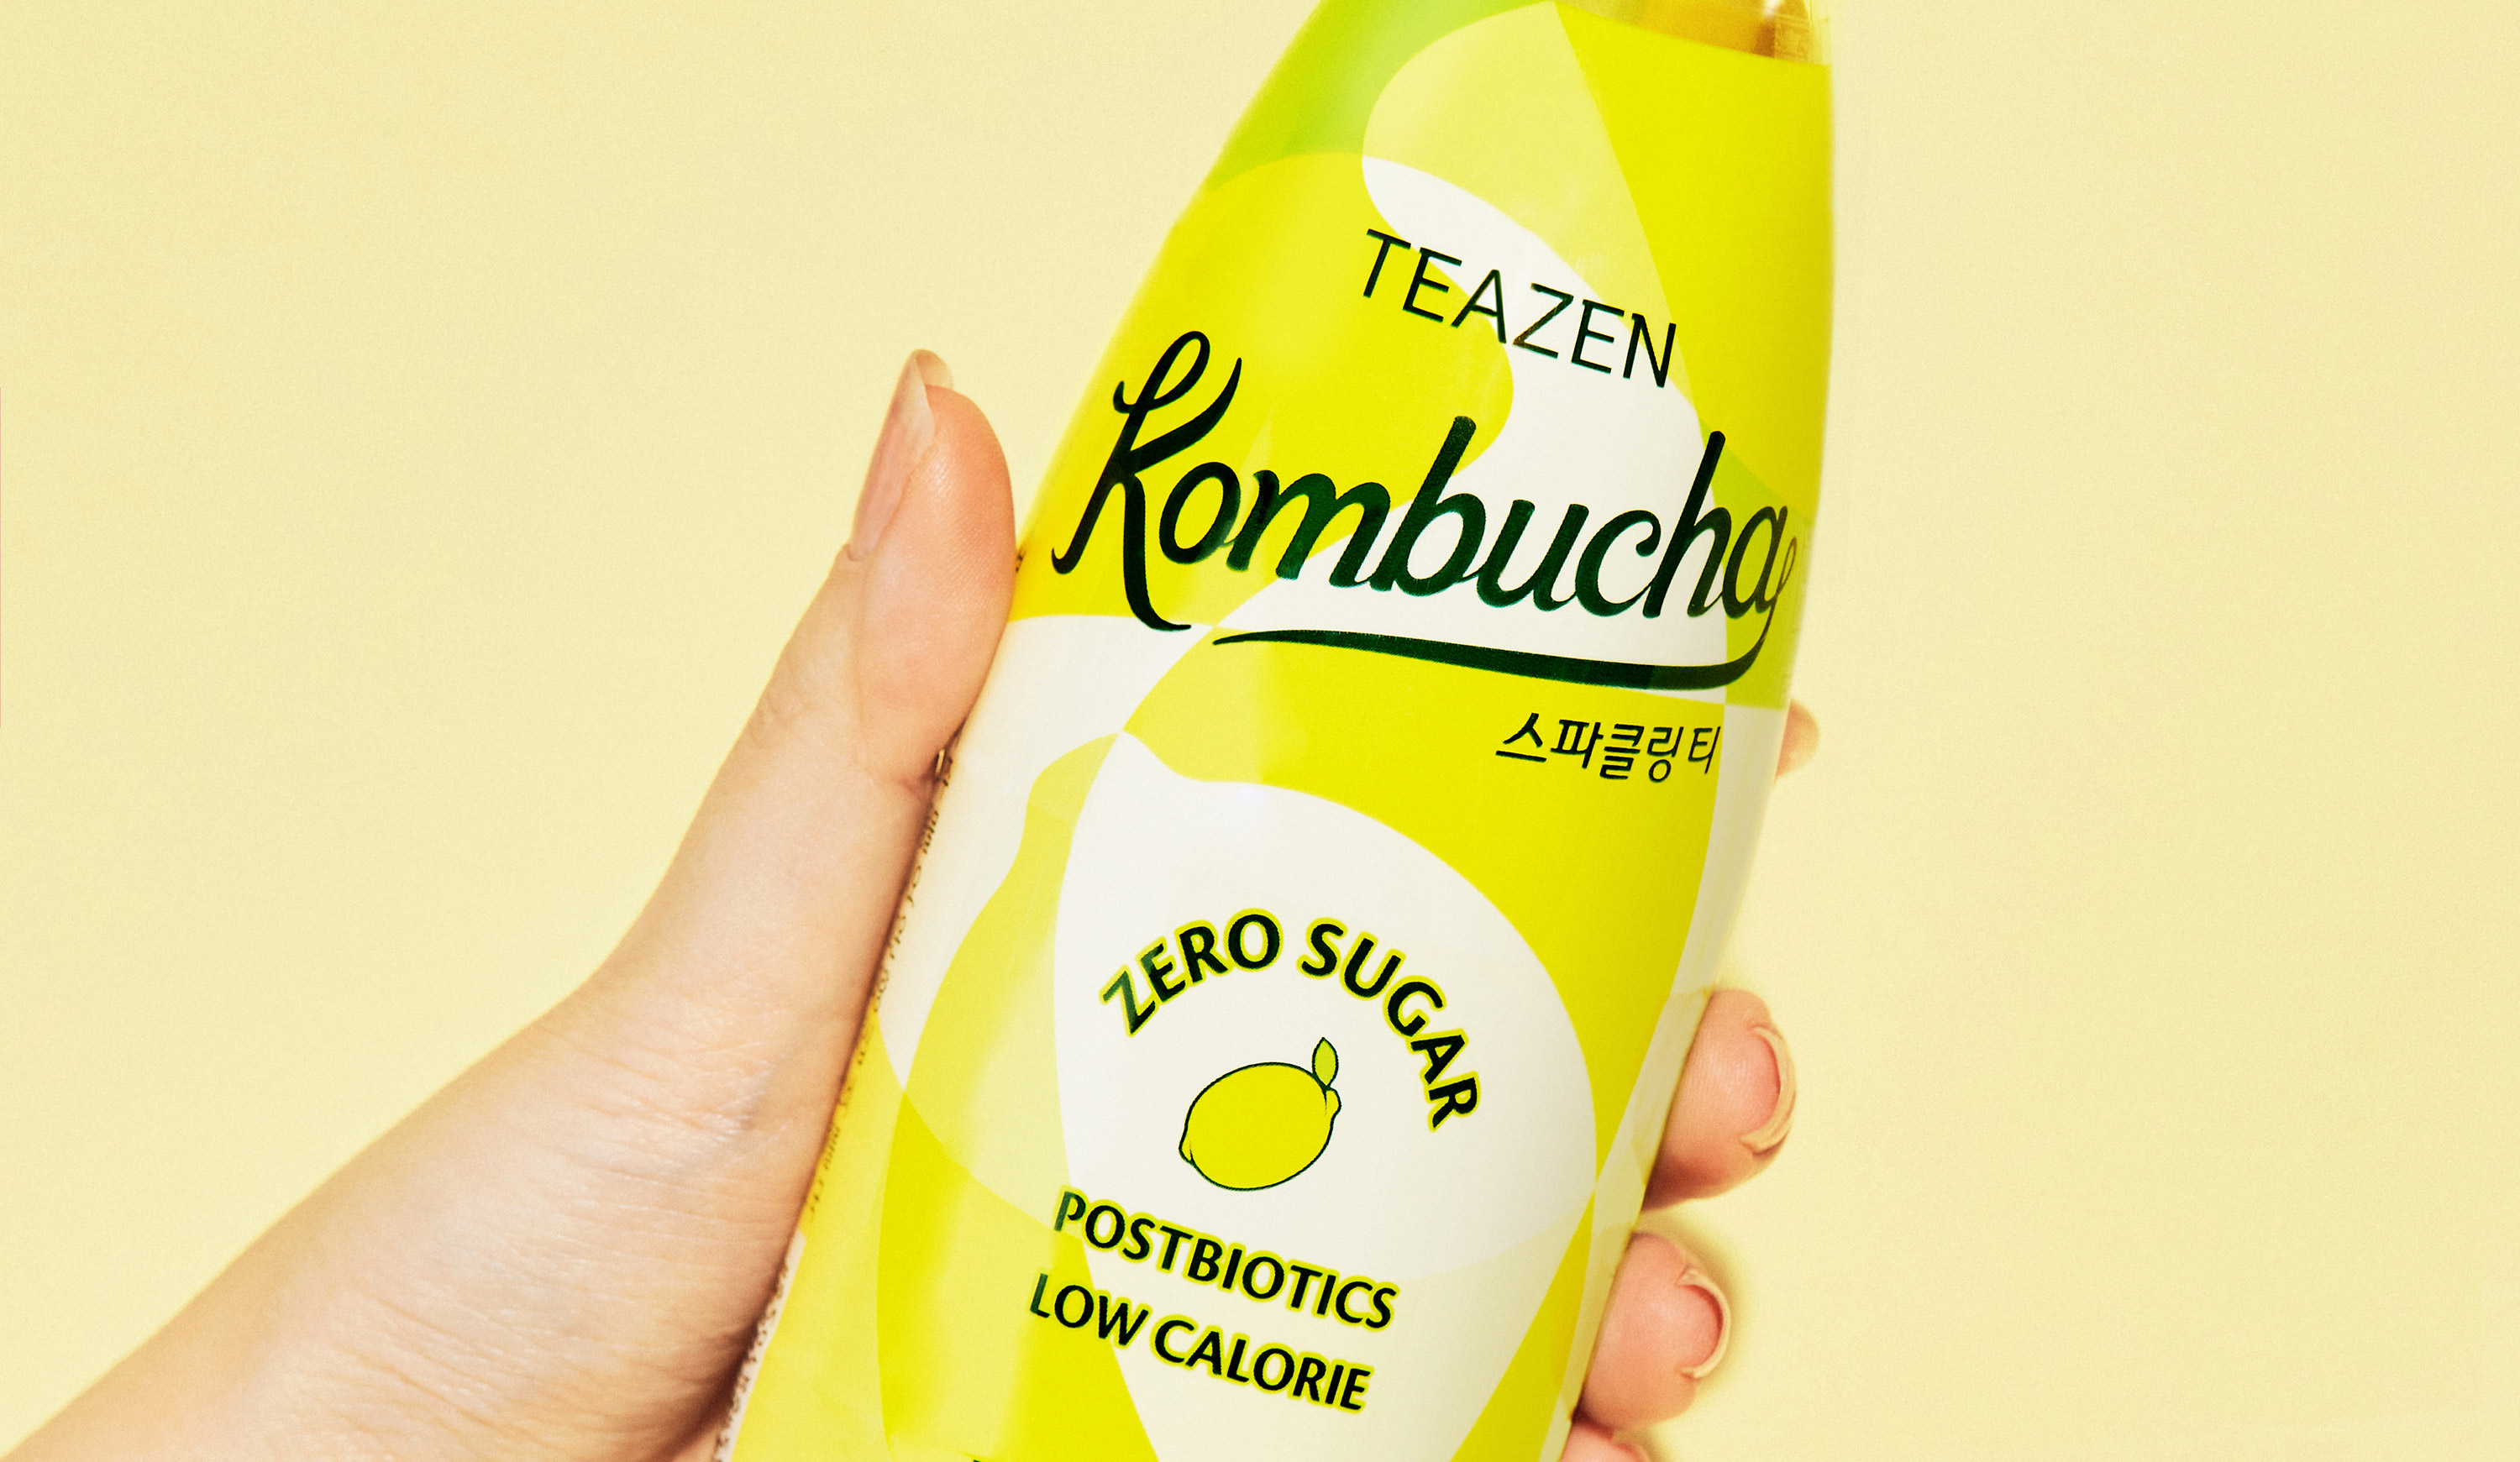 Teazen Kombucha Sparkling Tea Packaging Design by YNL Design